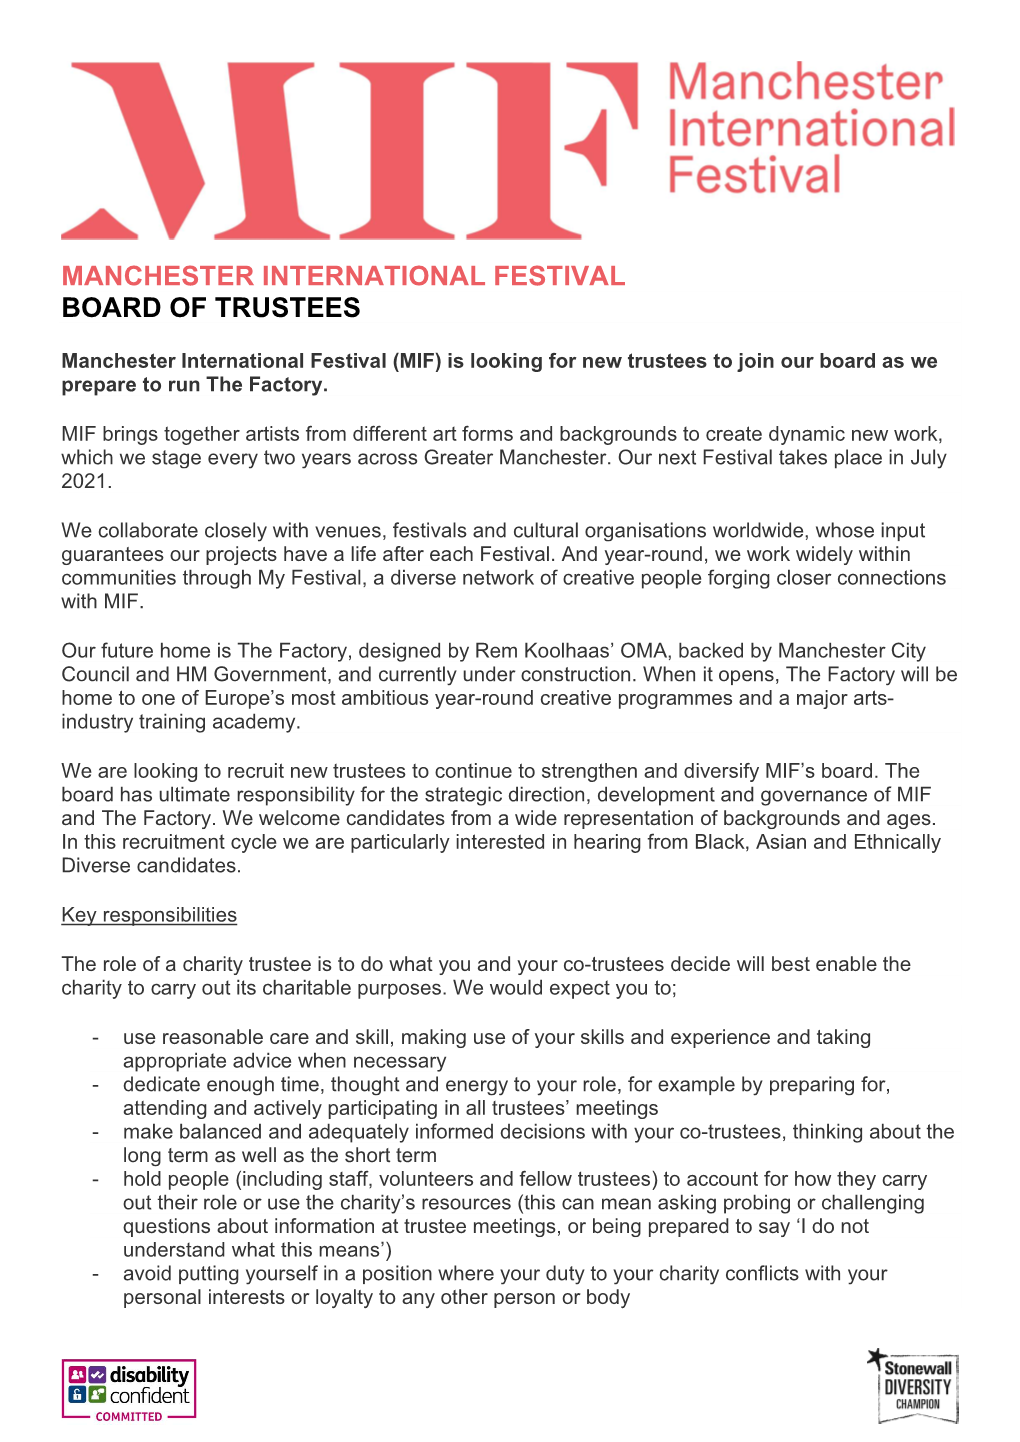 Manchester International Festival Board of Trustees